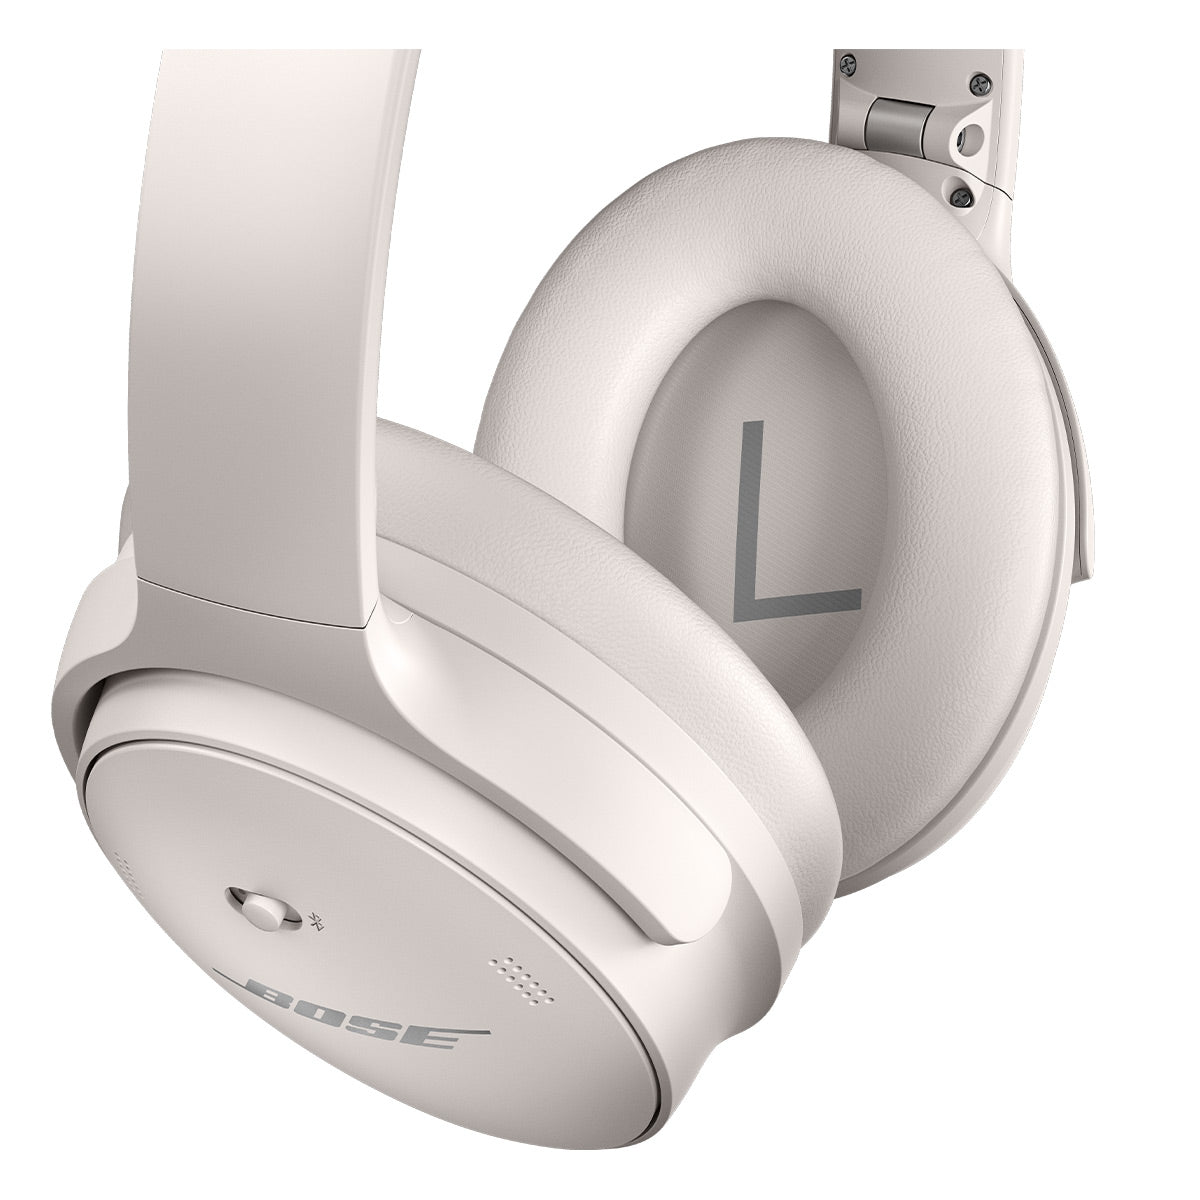 Bose QuietComfort 45 Wireless Noise Canceling Headphones (White) and Bose SoundLink Flex Bluetooth Portable Speaker (Stone Blue)